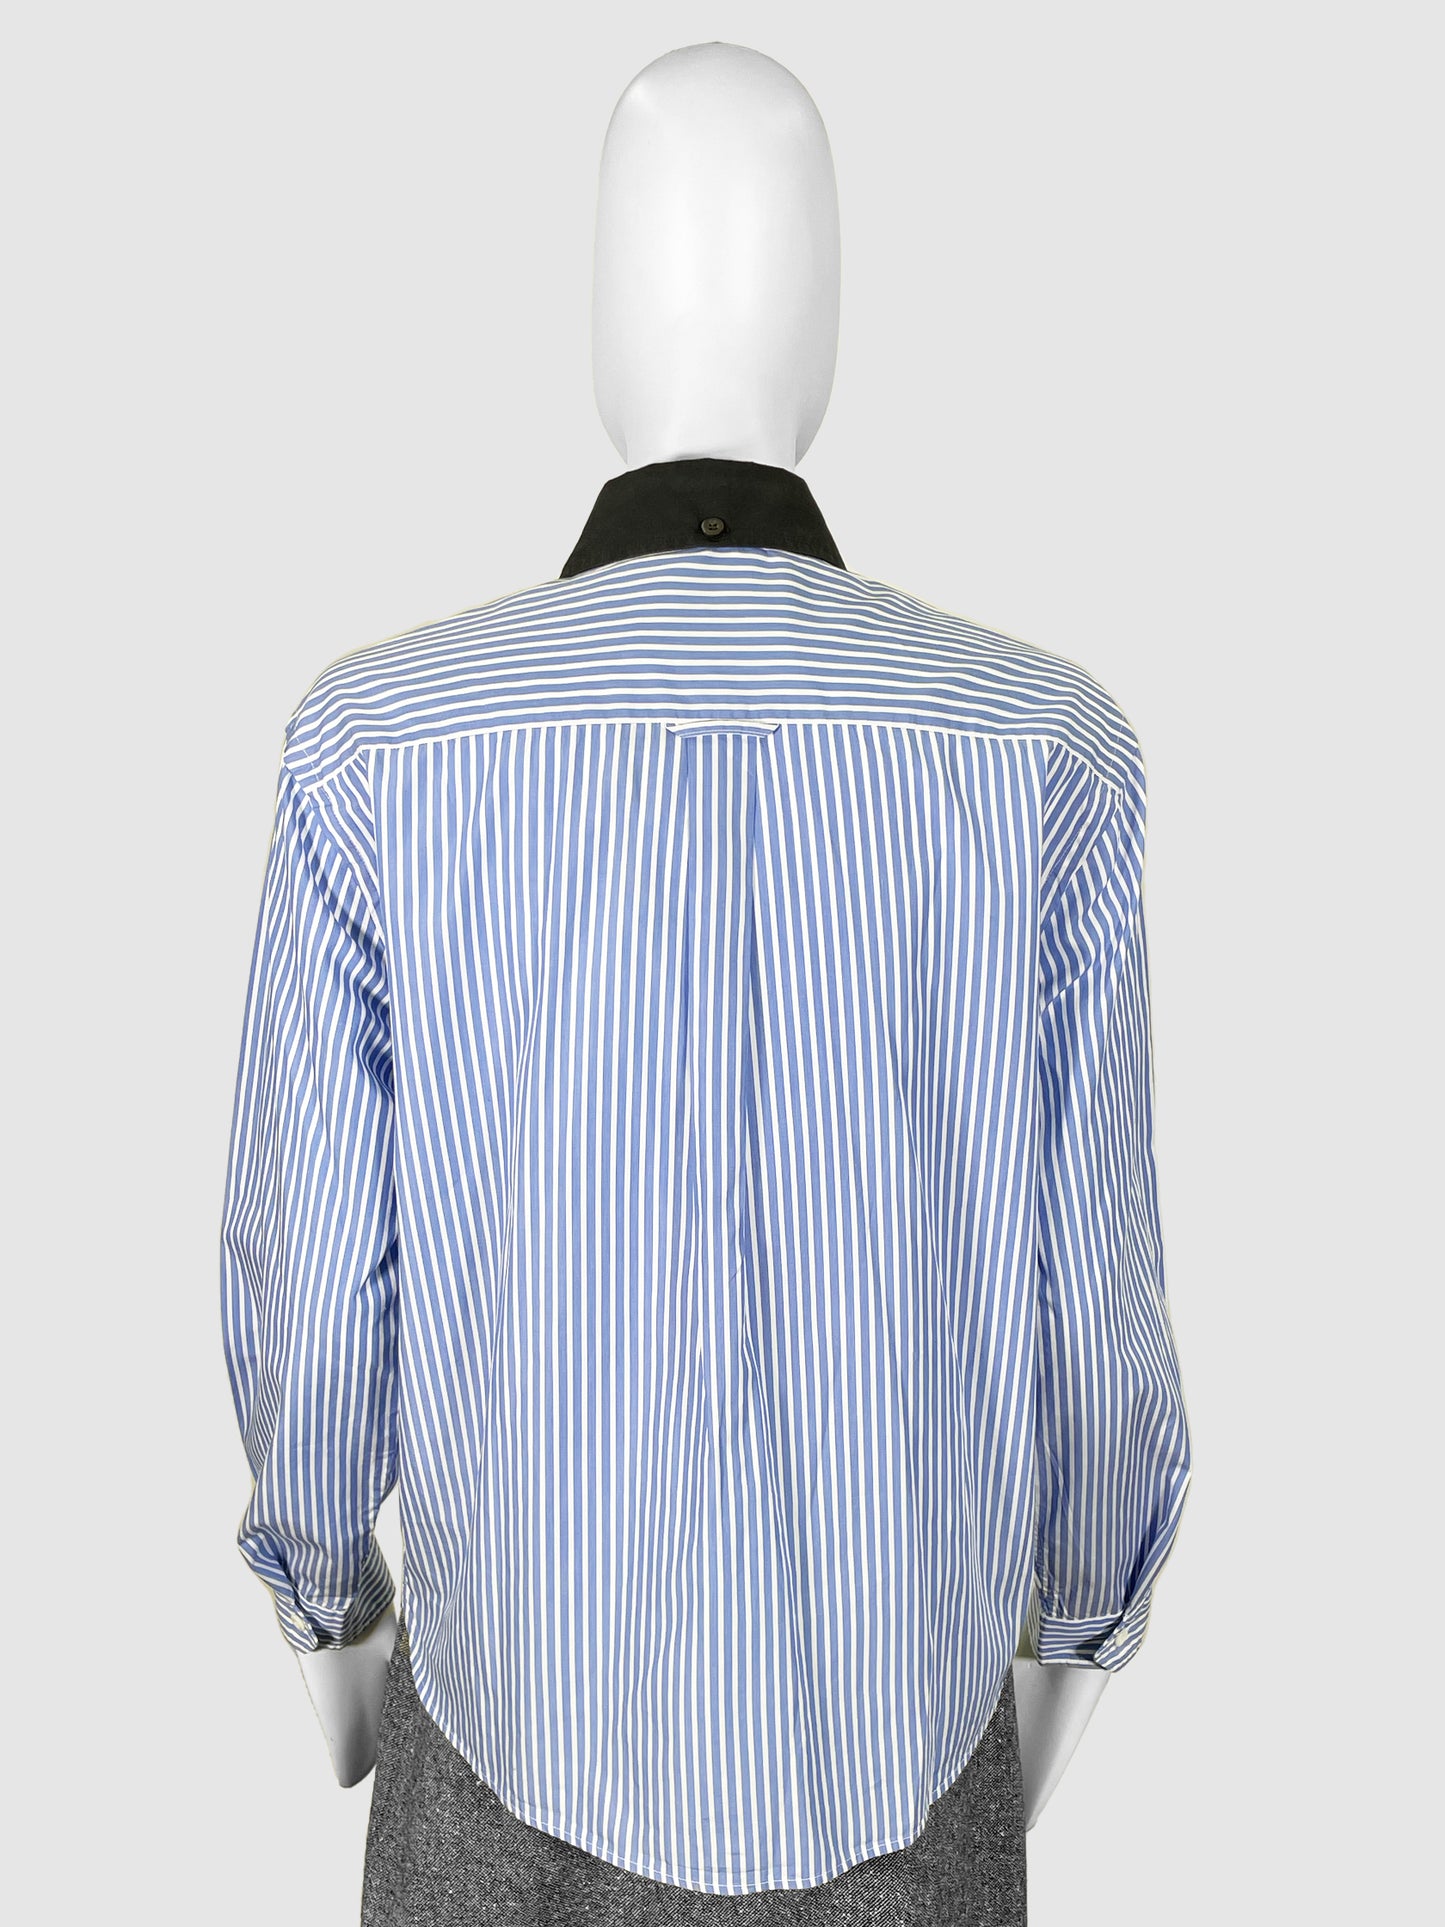 Prada Blue Striped Button-Up - Size 38